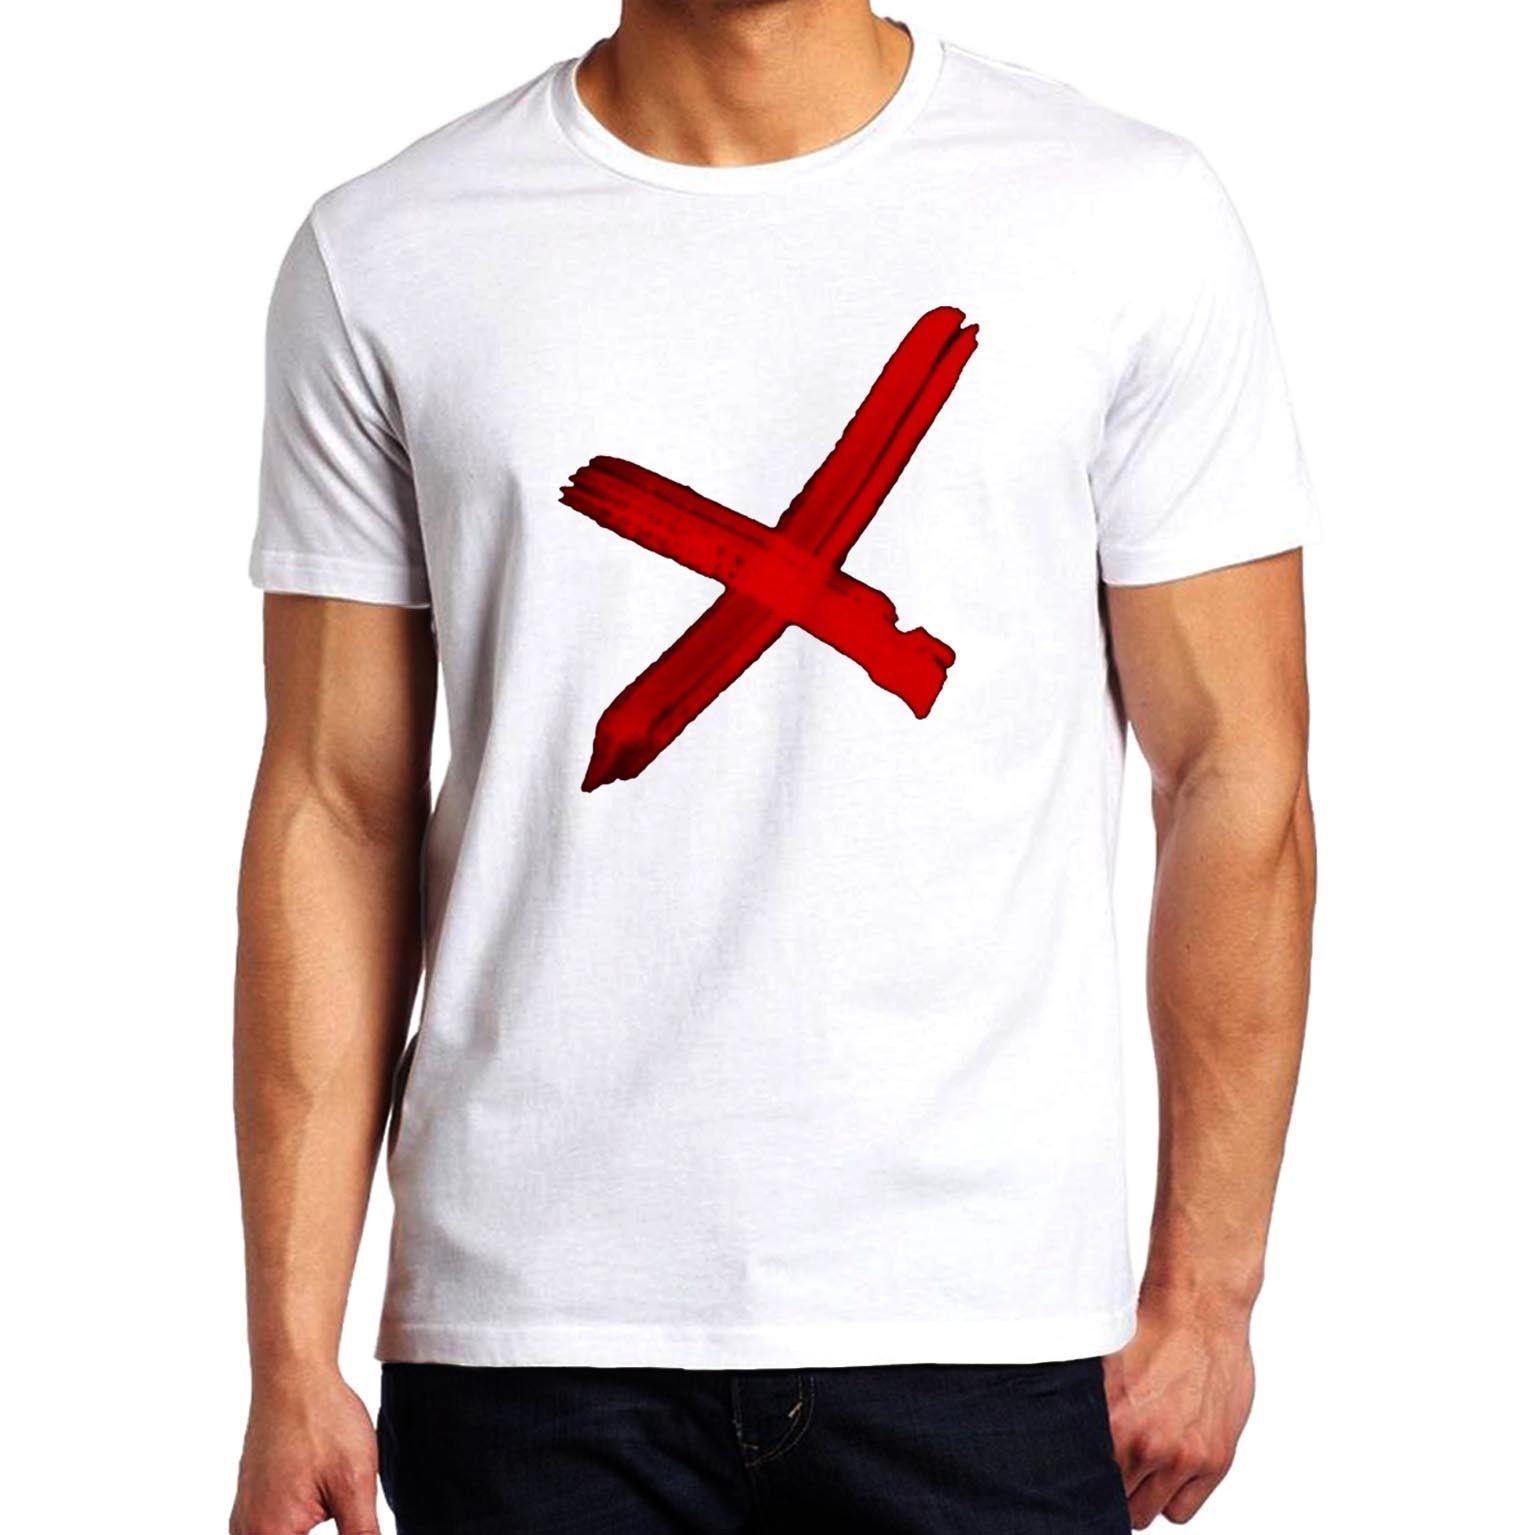 Chris Brown X Logo - Chris Brown X Shirt Logo Tshirt Cool Looking T Shirts Buy Designer ...